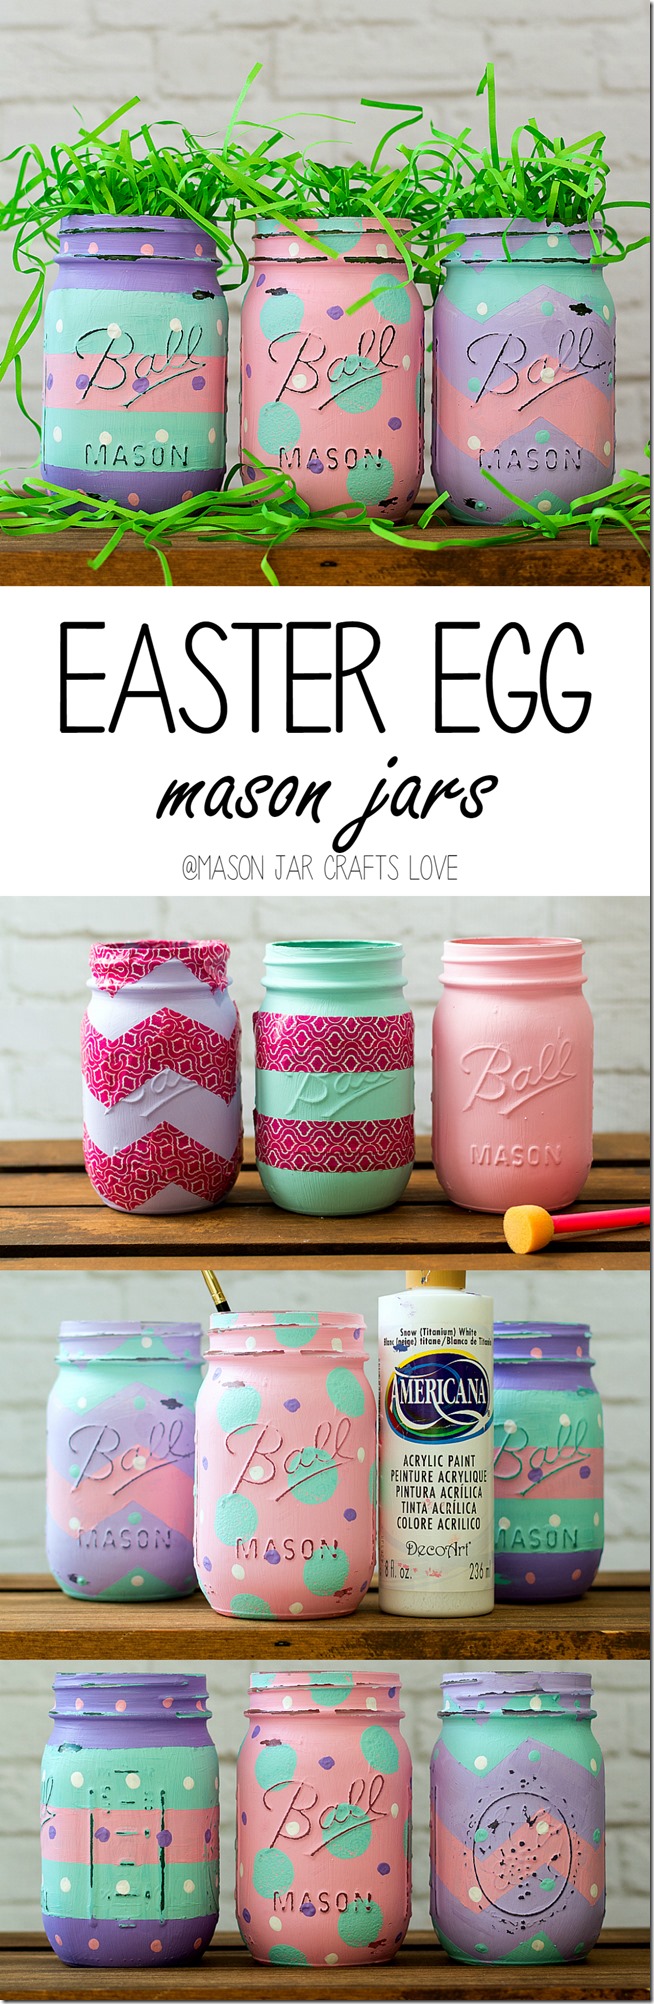 Easter-egg-mason-jars